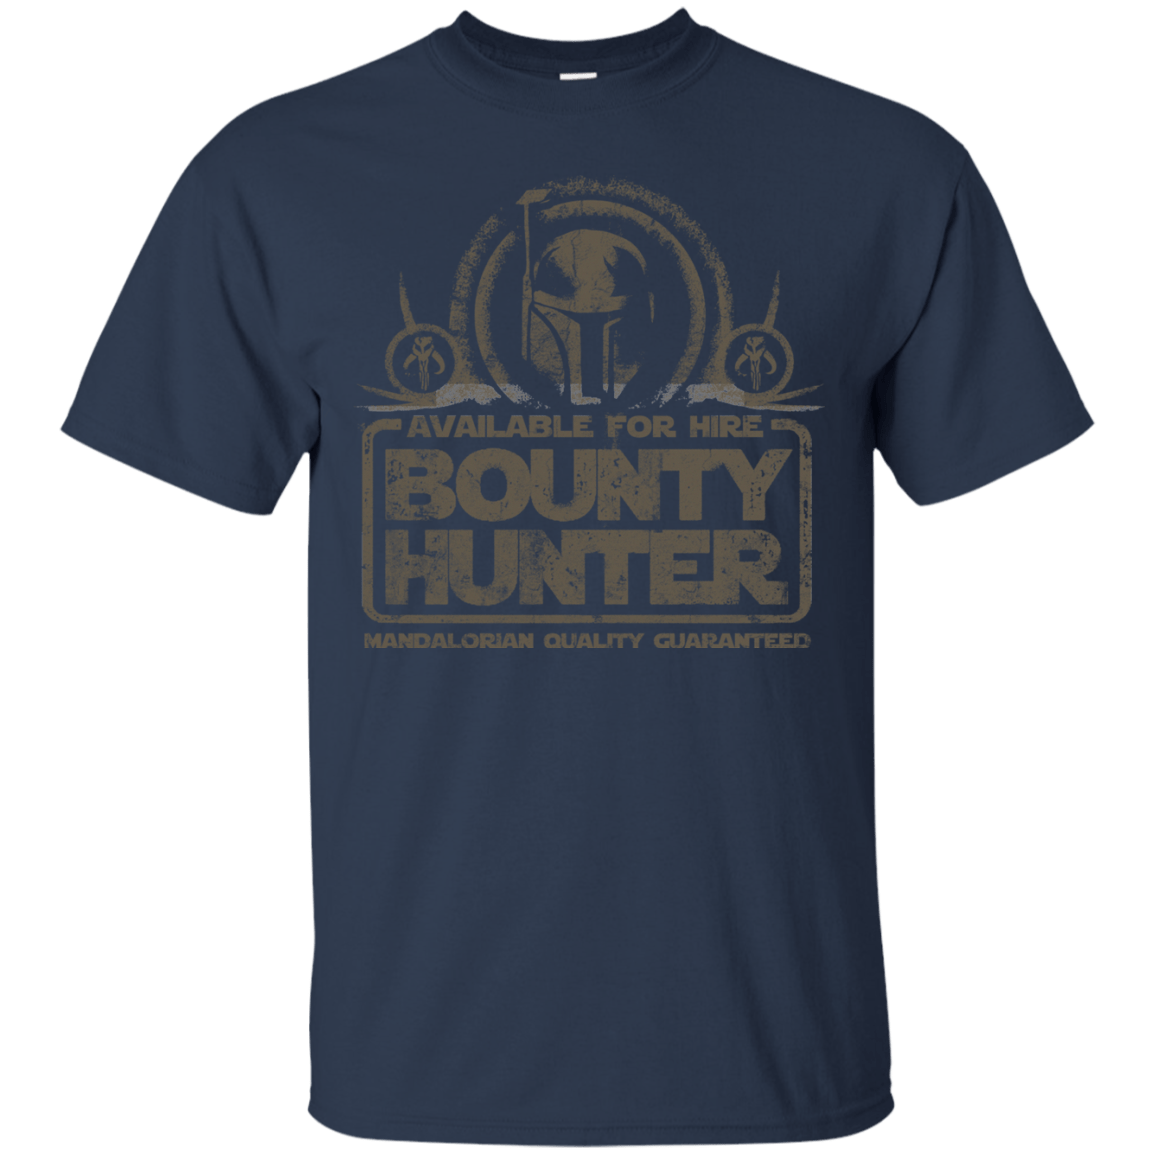 T-Shirts Navy / Small bounty hunter 2 T-Shirt